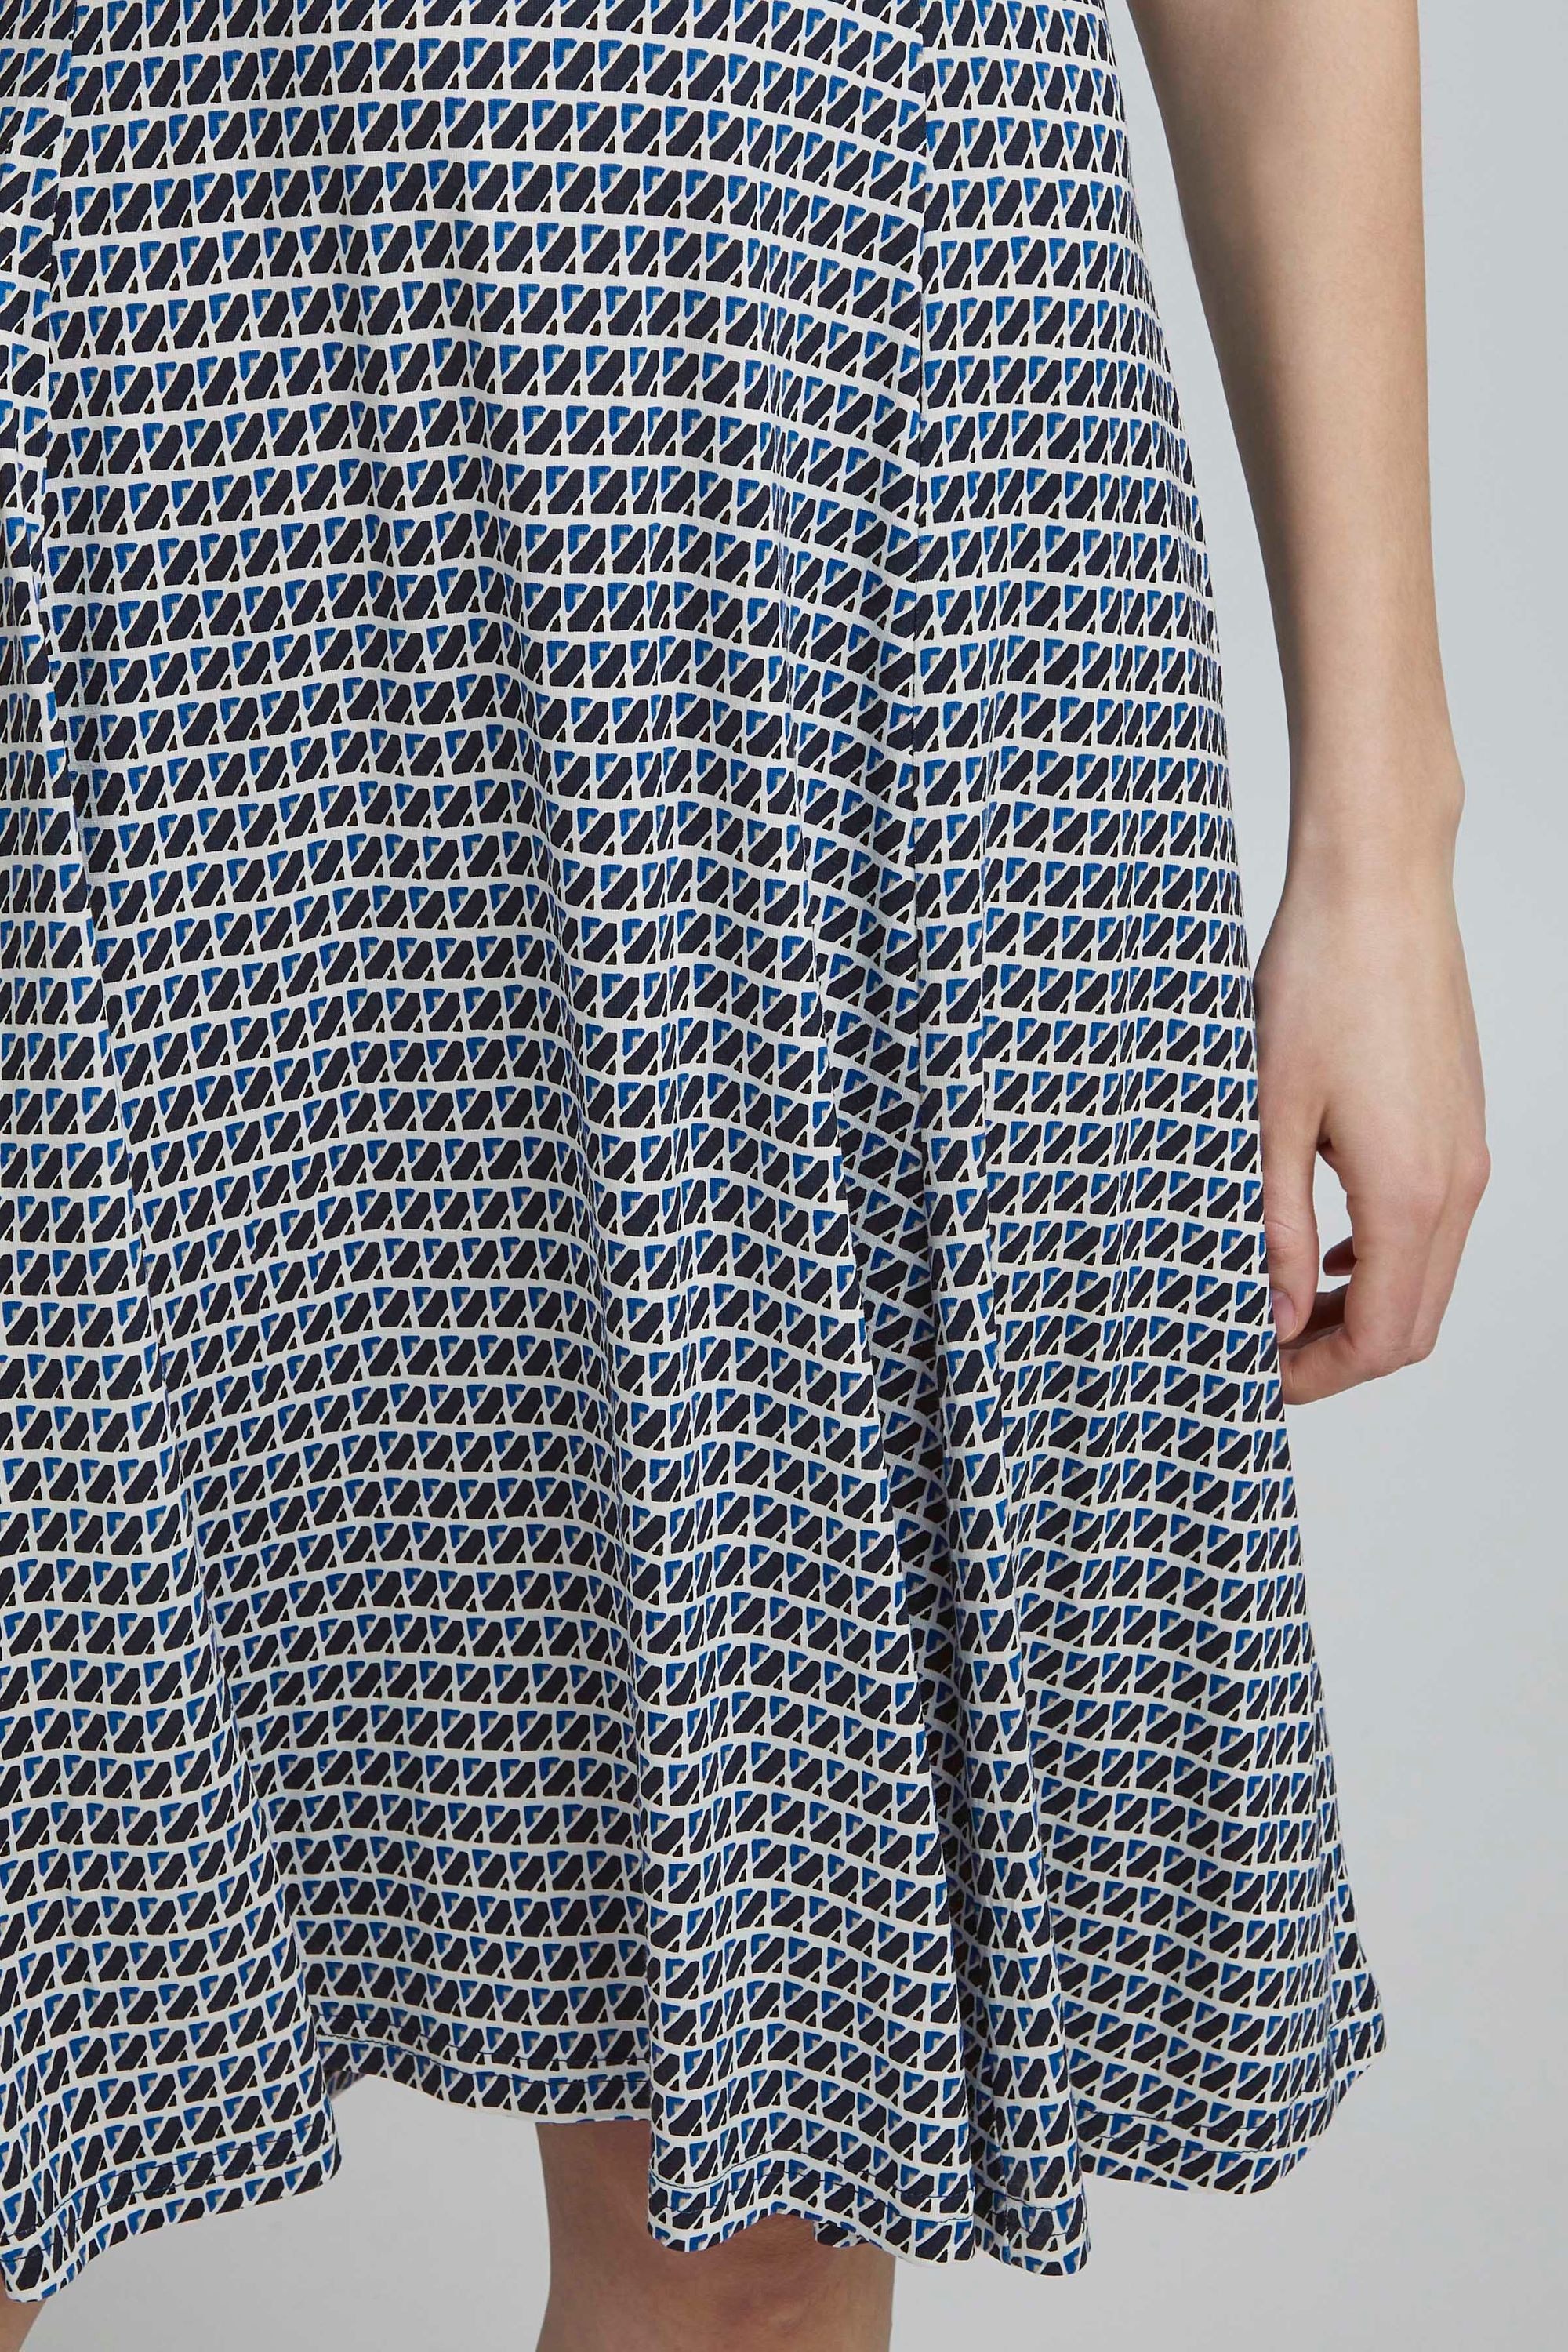 FRFEDOT online kaufen 1 Dress« | Jerseykleid fransa »Fransa I\'m walking